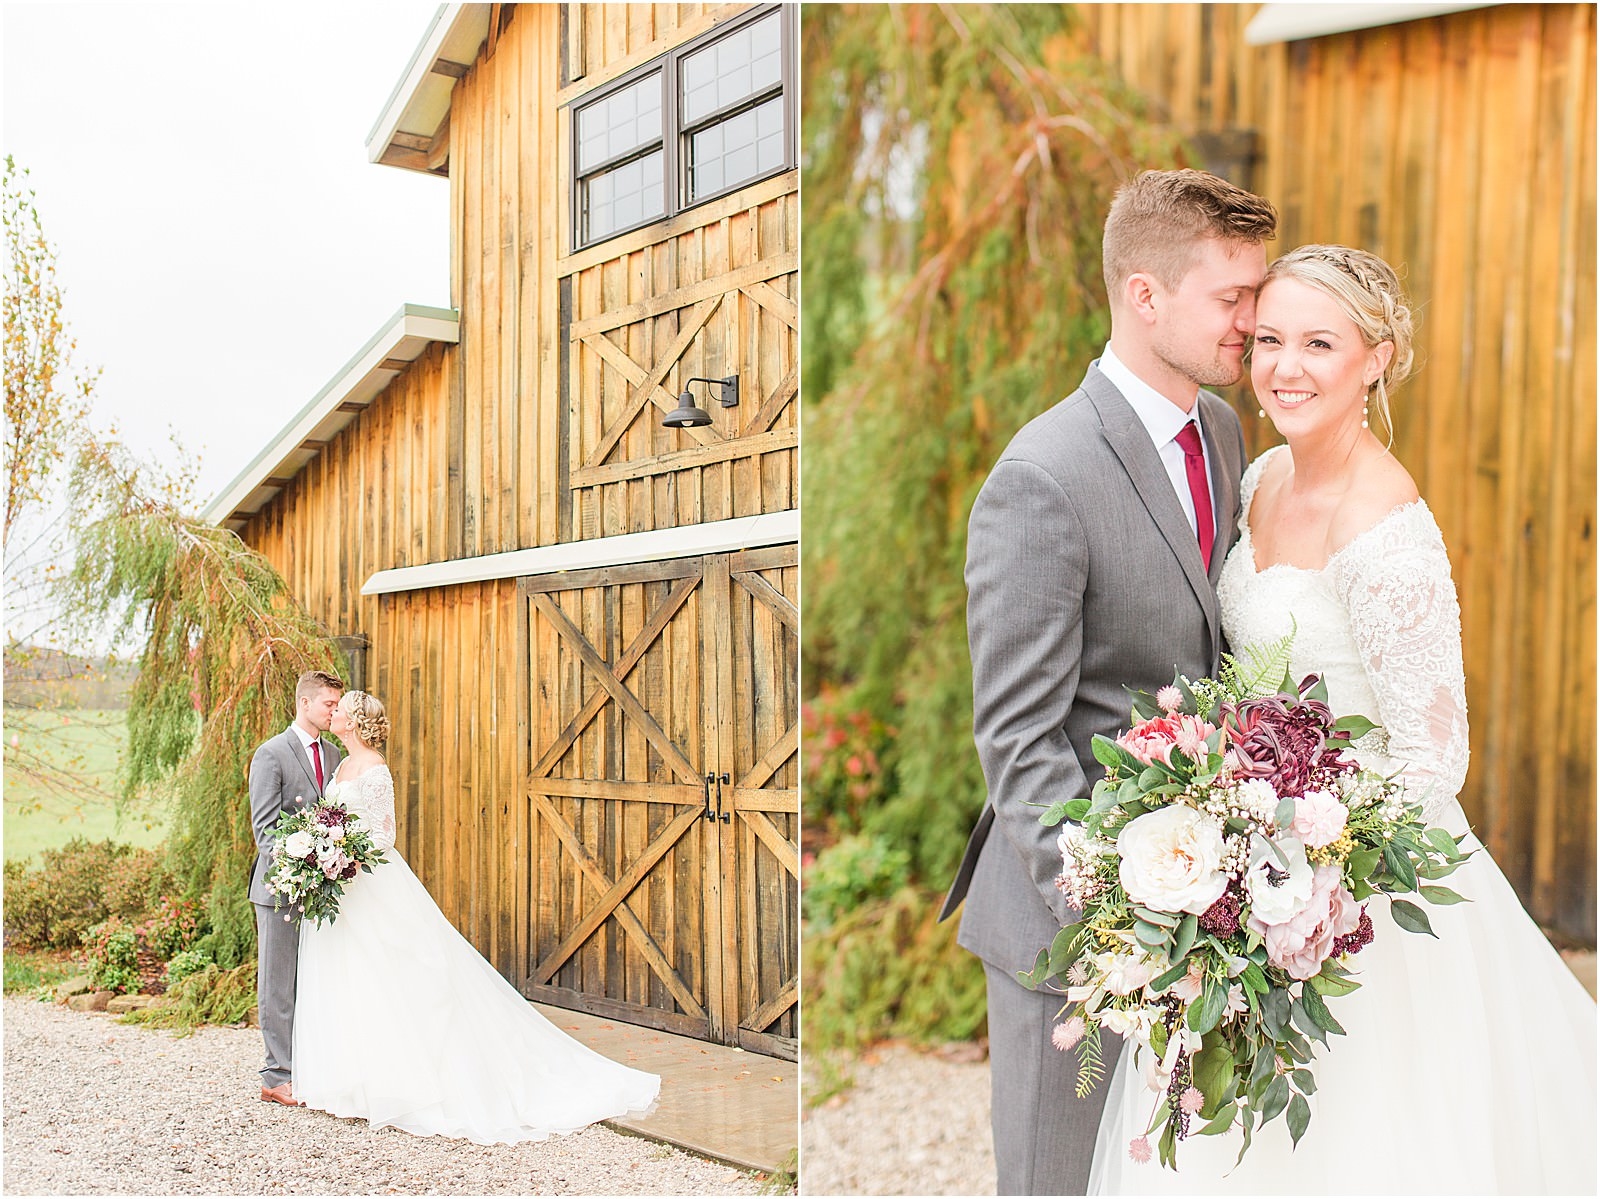 A Rainy Corner House Wedding | Rachel and Nick | Bret and Brandie Photography 0047.jpg